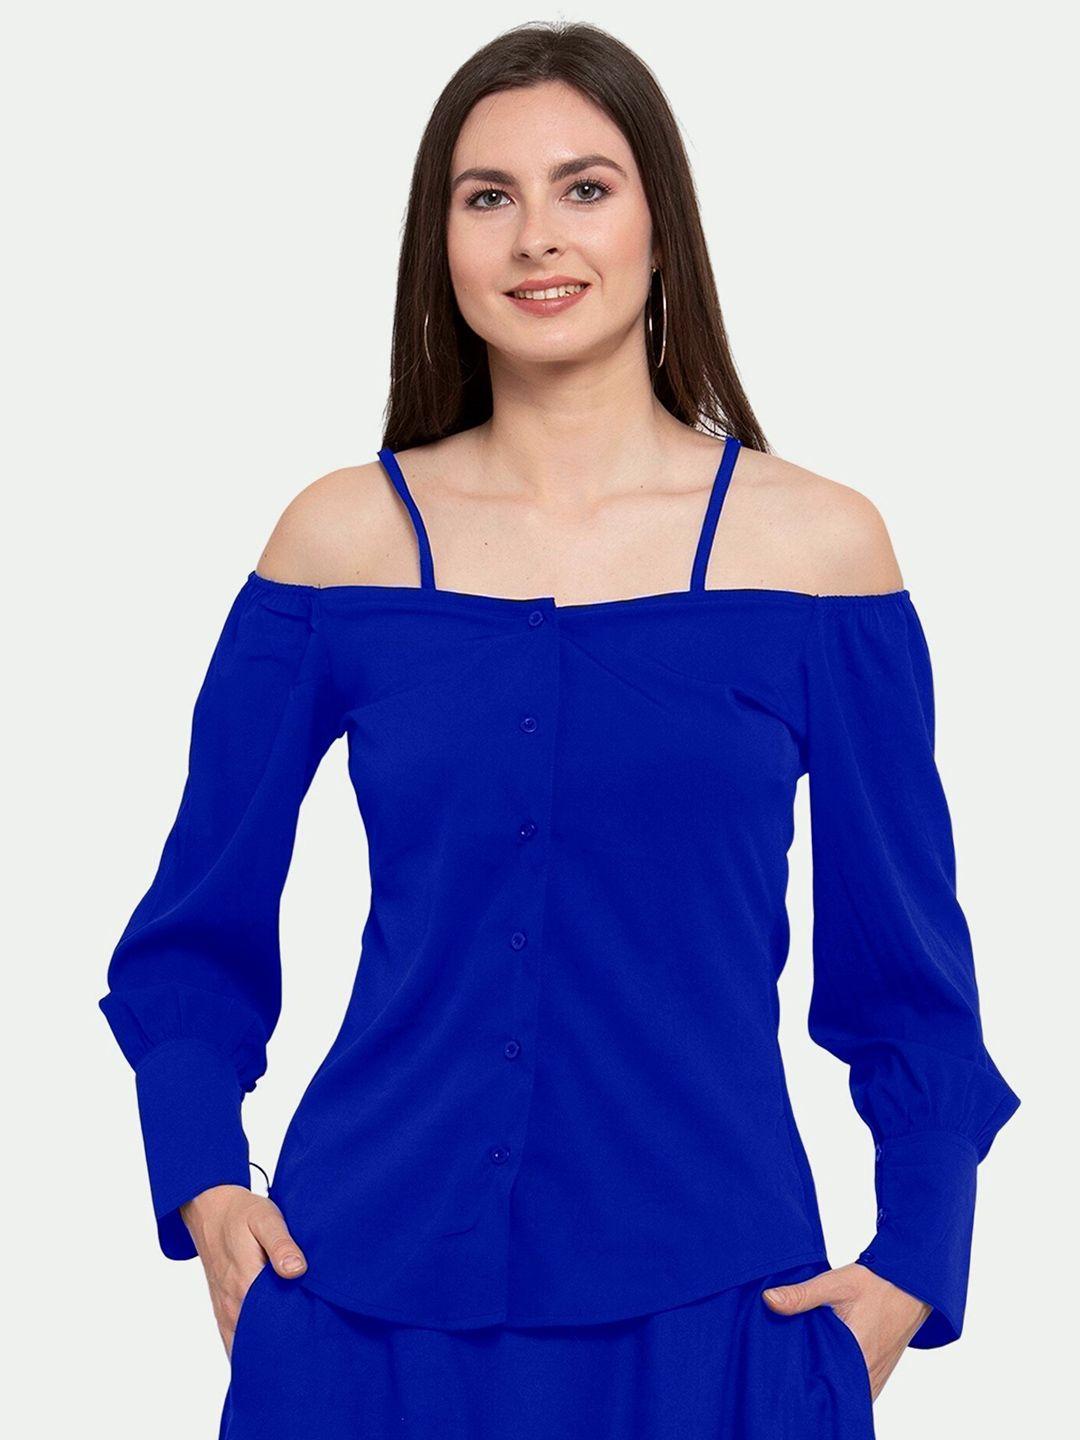 patrorna-women-blue-shirt-style-top